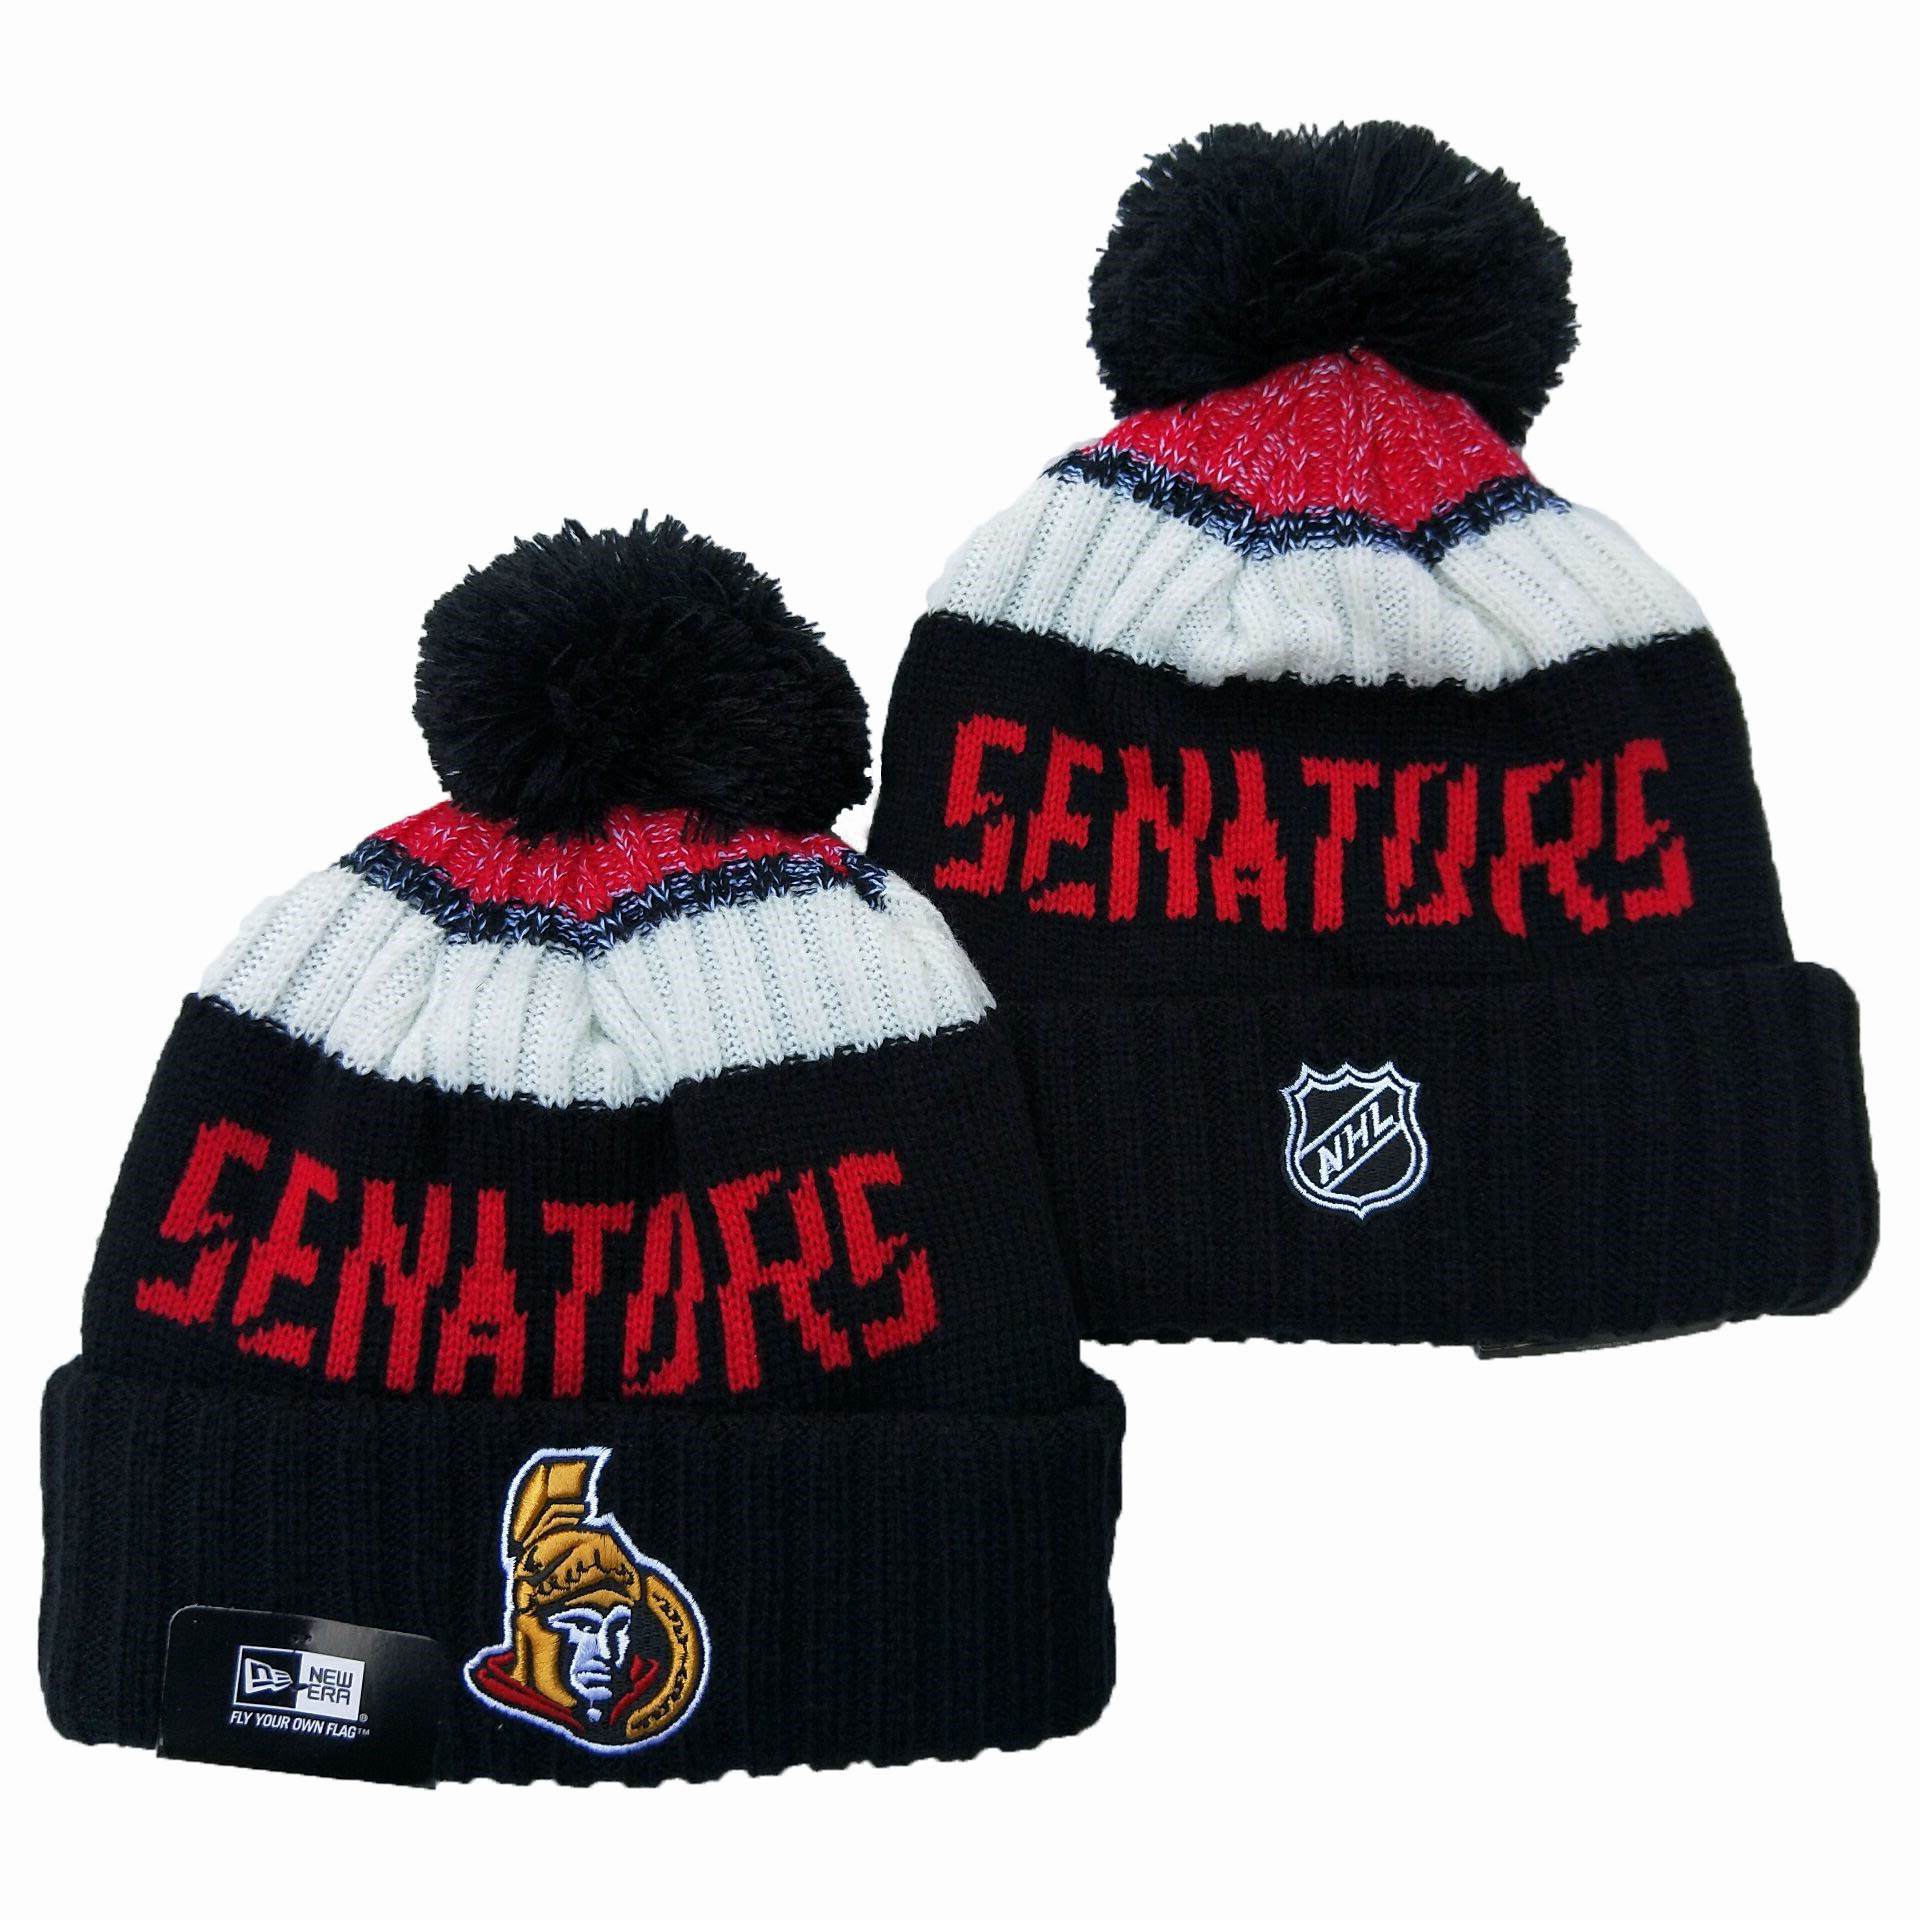 Ottawa Senators Knit Hats -2